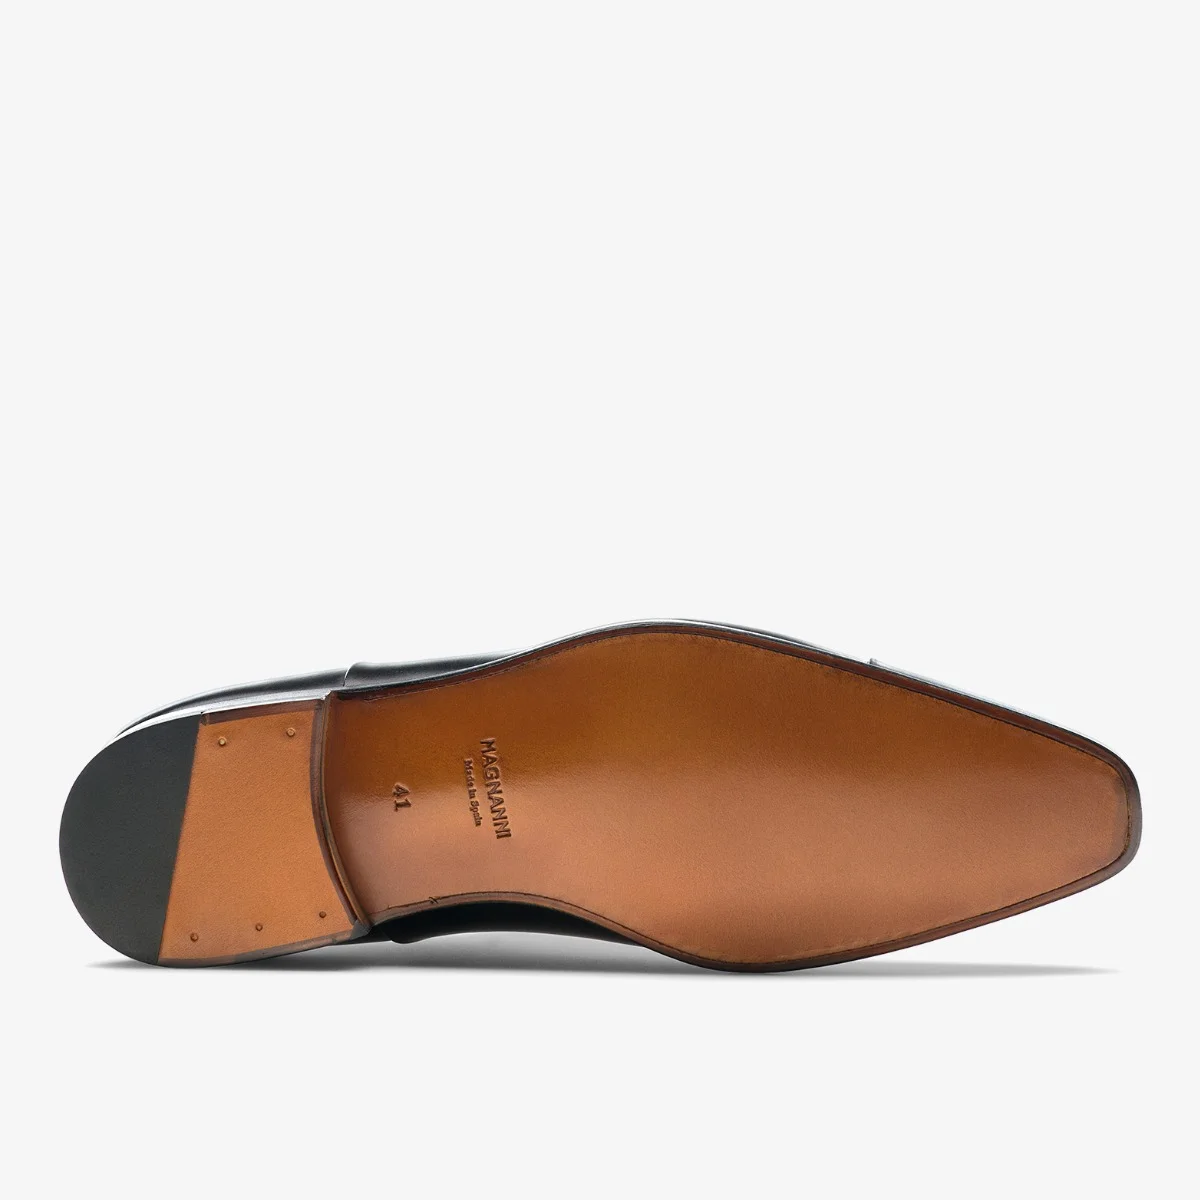 Magnanni Milos black toe cap oxford shoes